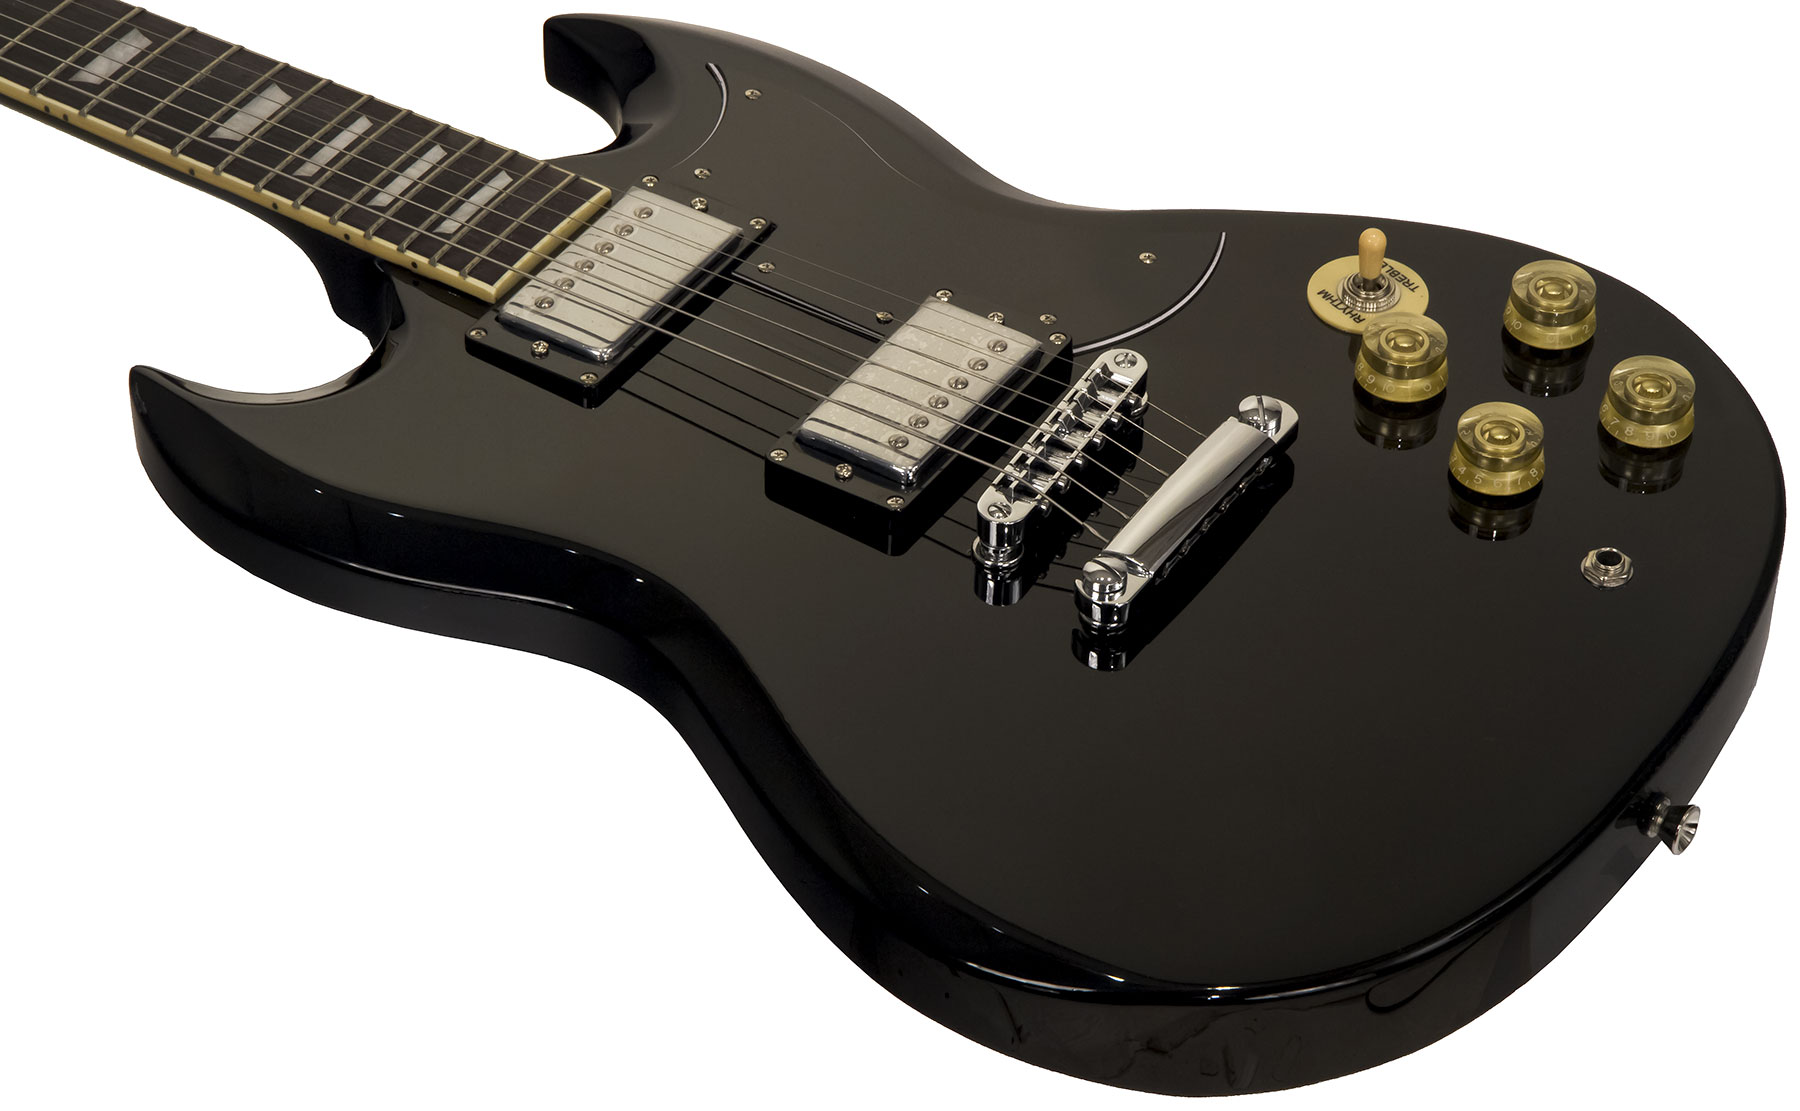 Eastone Sdc70 Hh Ht Pur - Black - Guitarra electrica retro rock - Variation 2